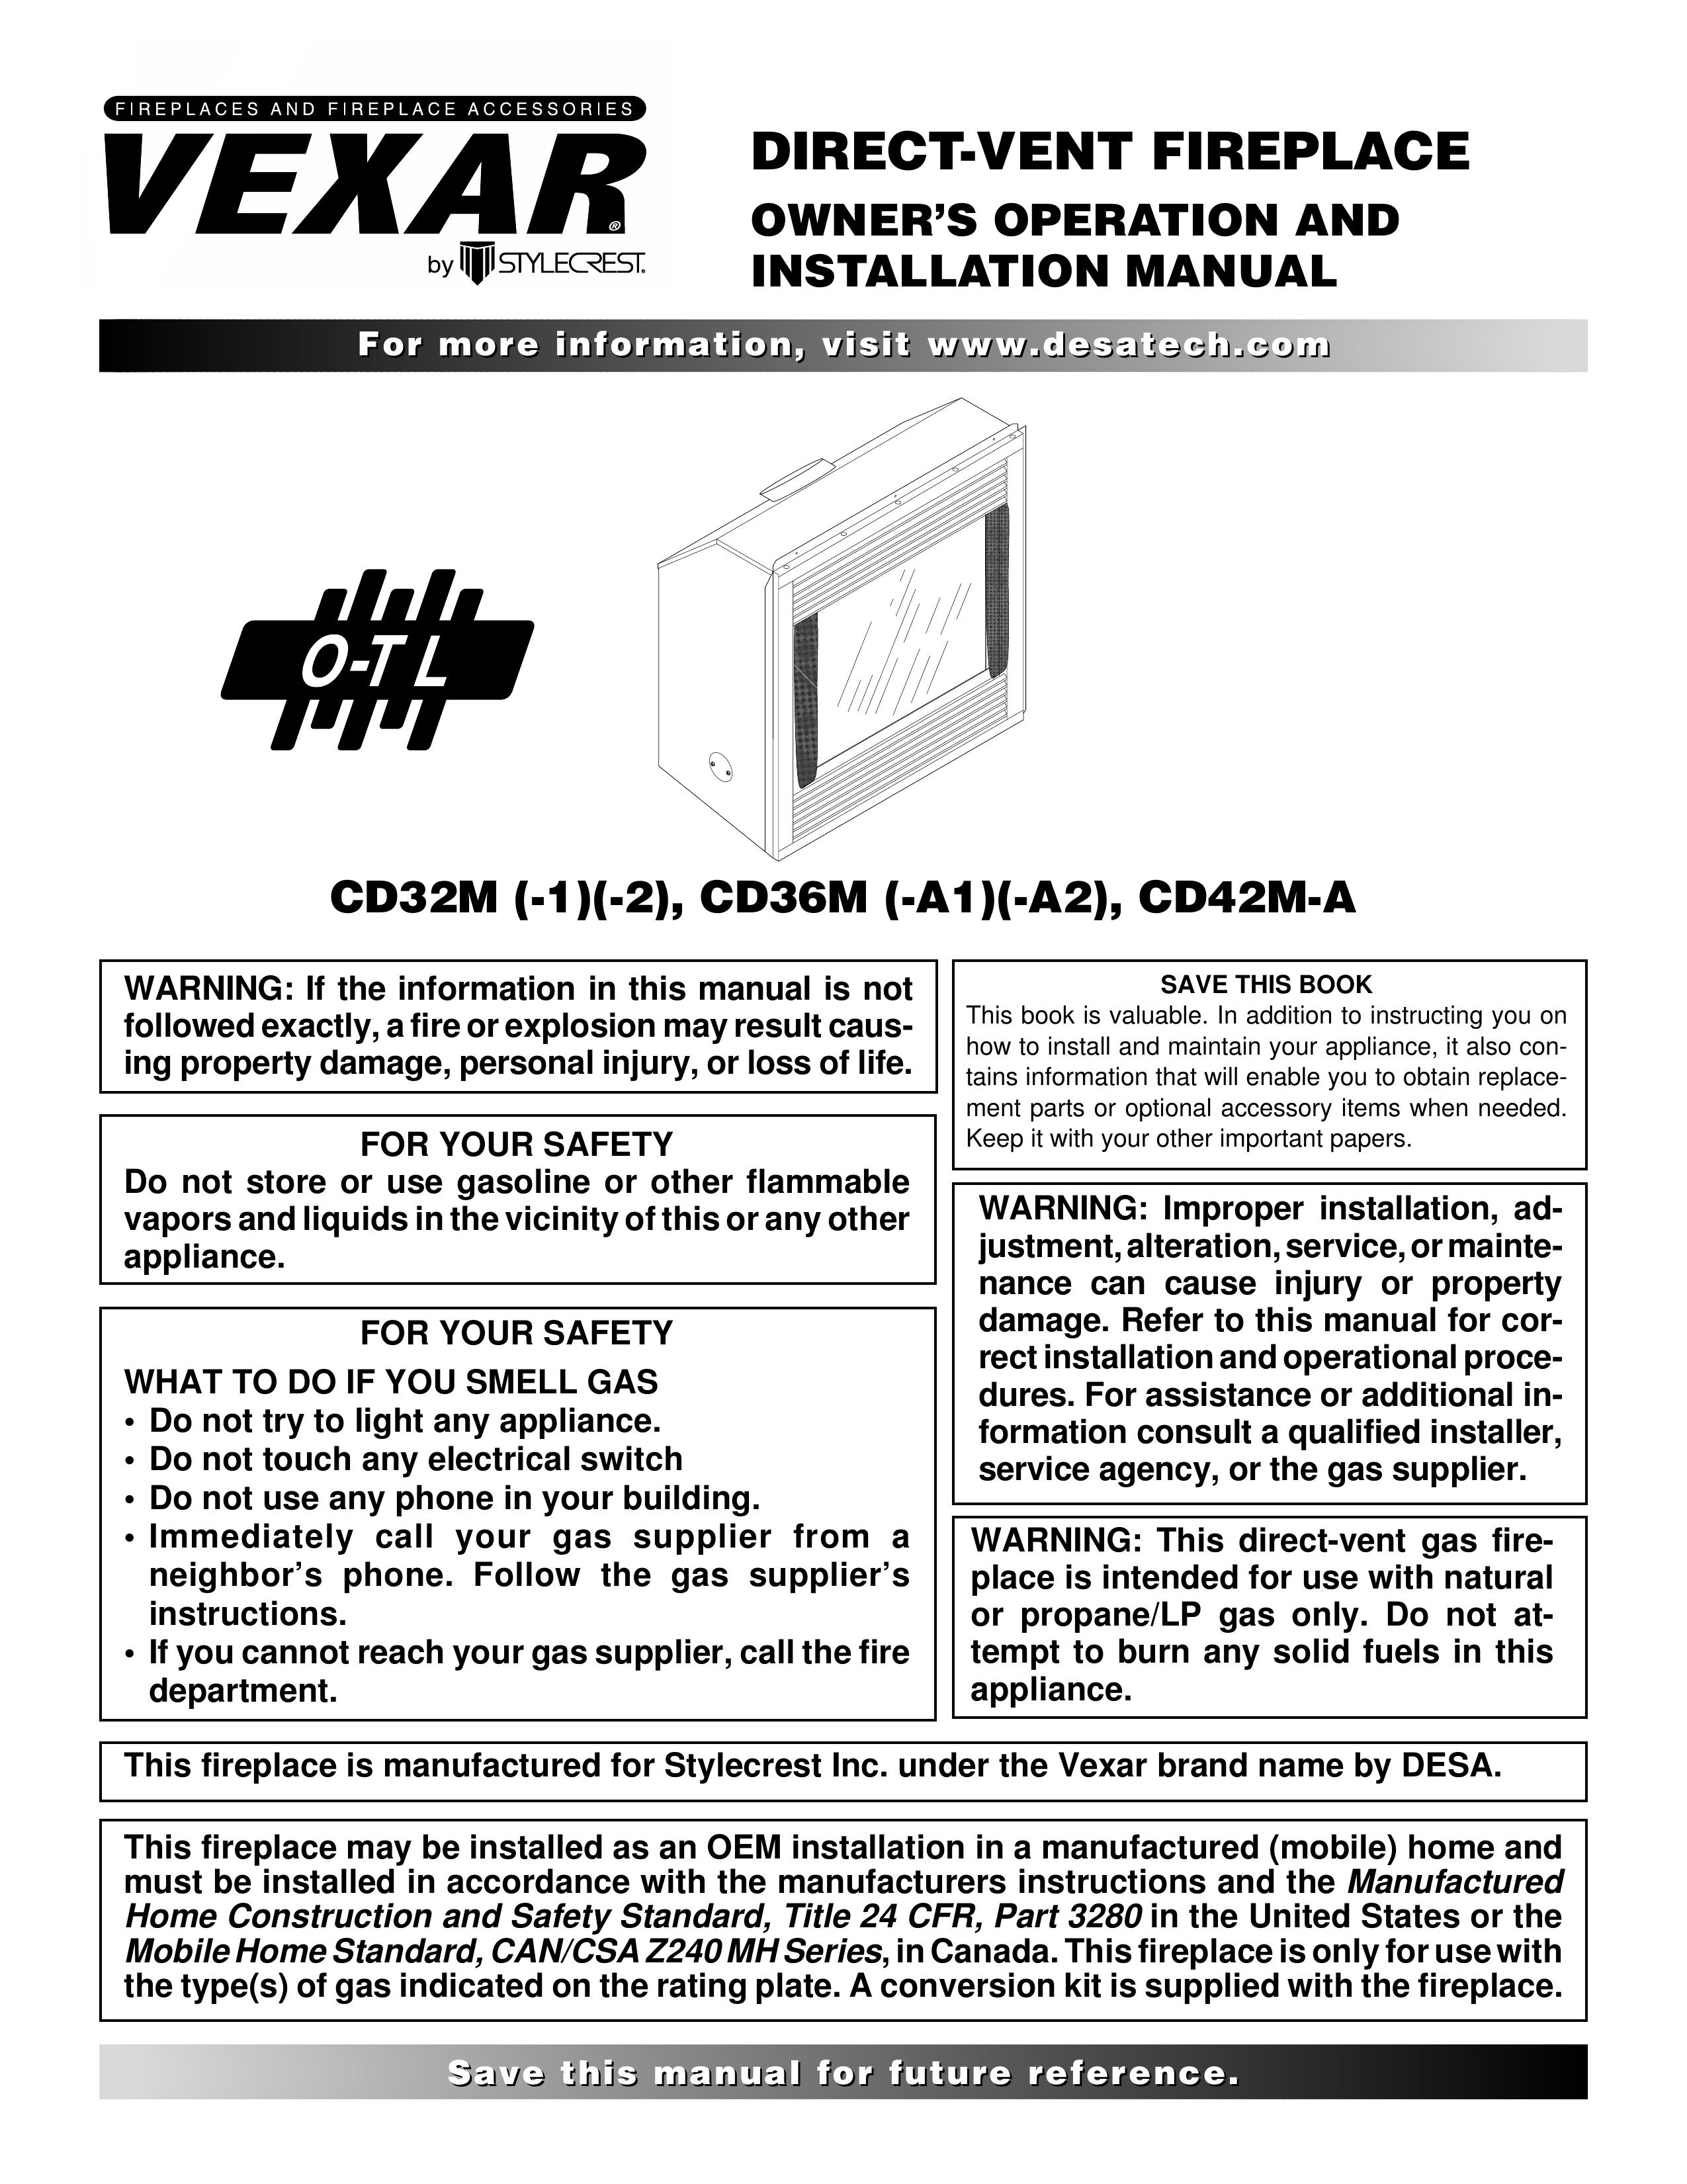 Desa CD32M Fire Pit User Manual